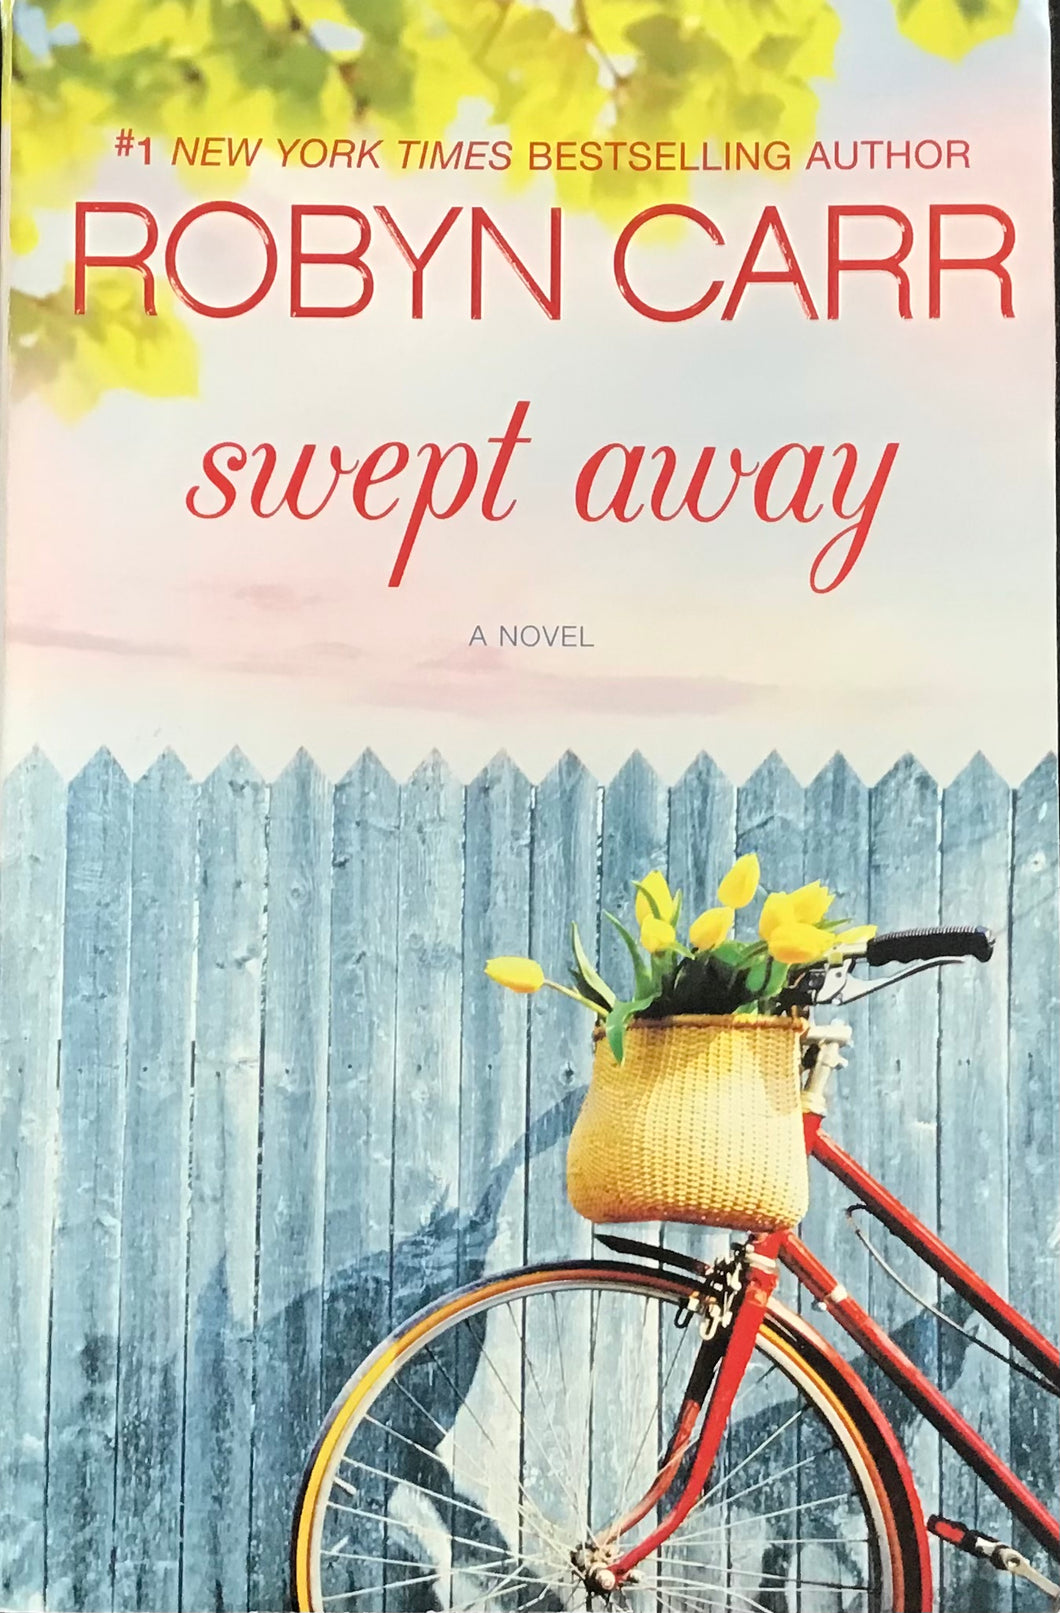 Swept away, Robyn Carr